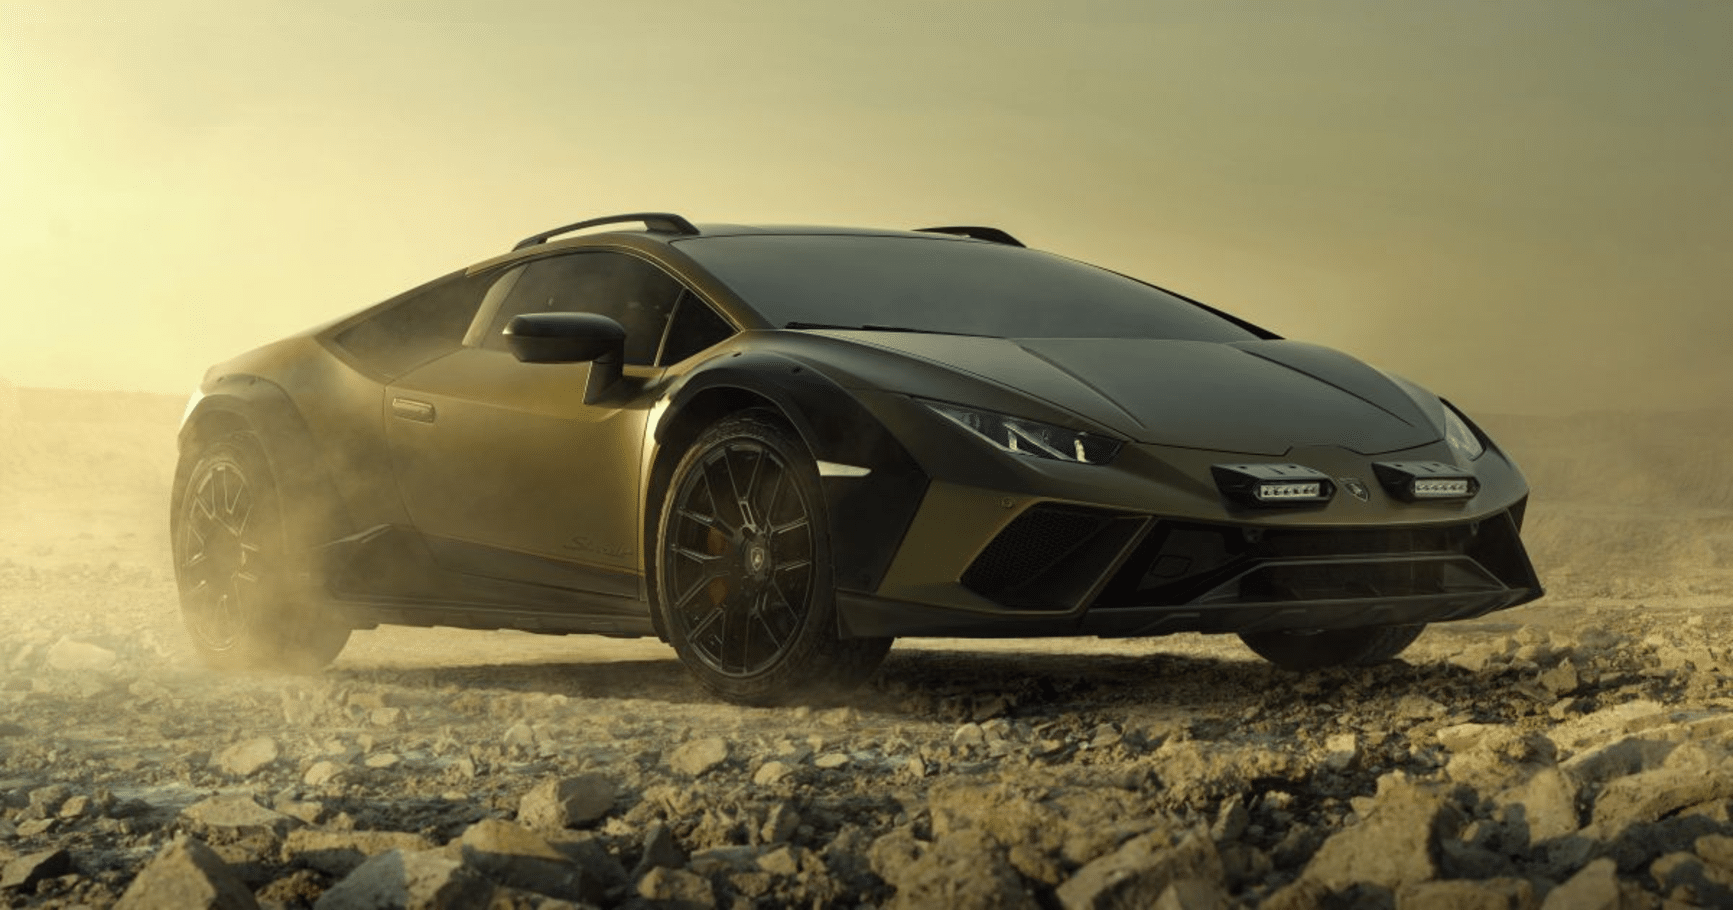 Lamborghini Recalls Huracan Models Due to Headlight Issue